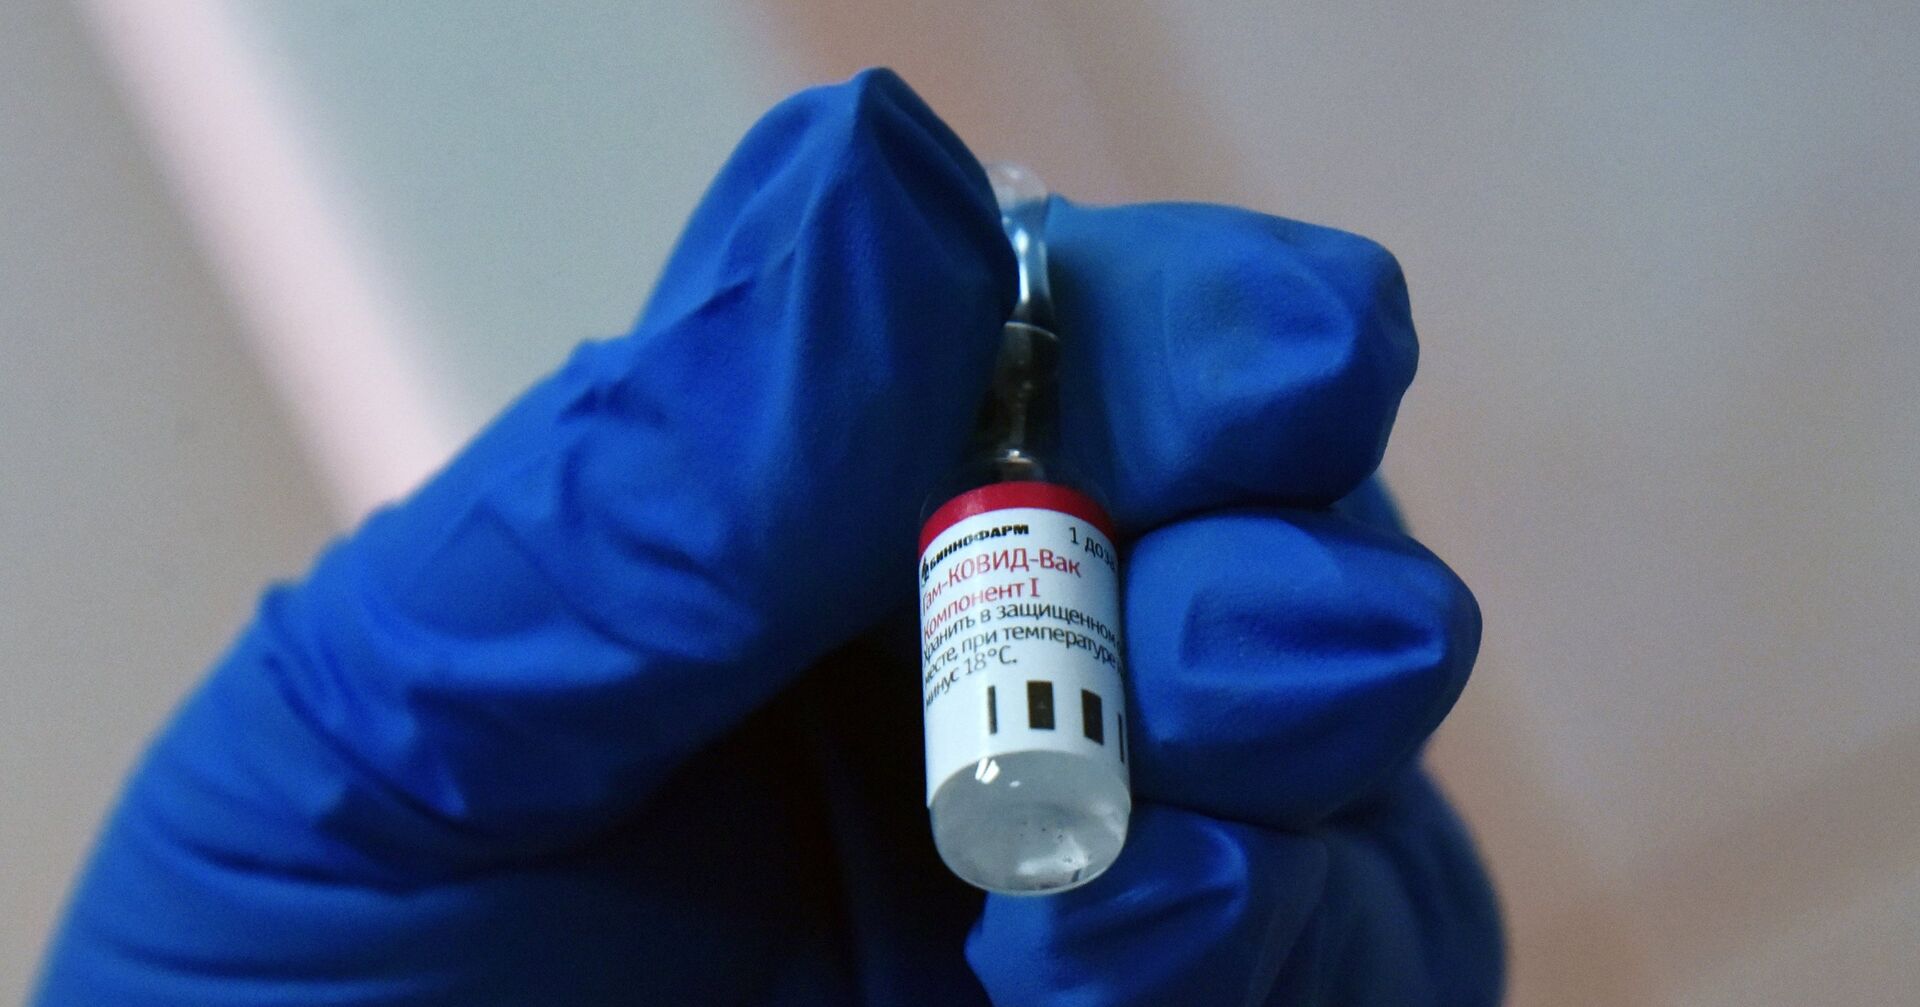 Медицинский работник держит в руке вакцину от COVID-19 Спутник-V - ИноСМИ, 1920, 07.02.2021